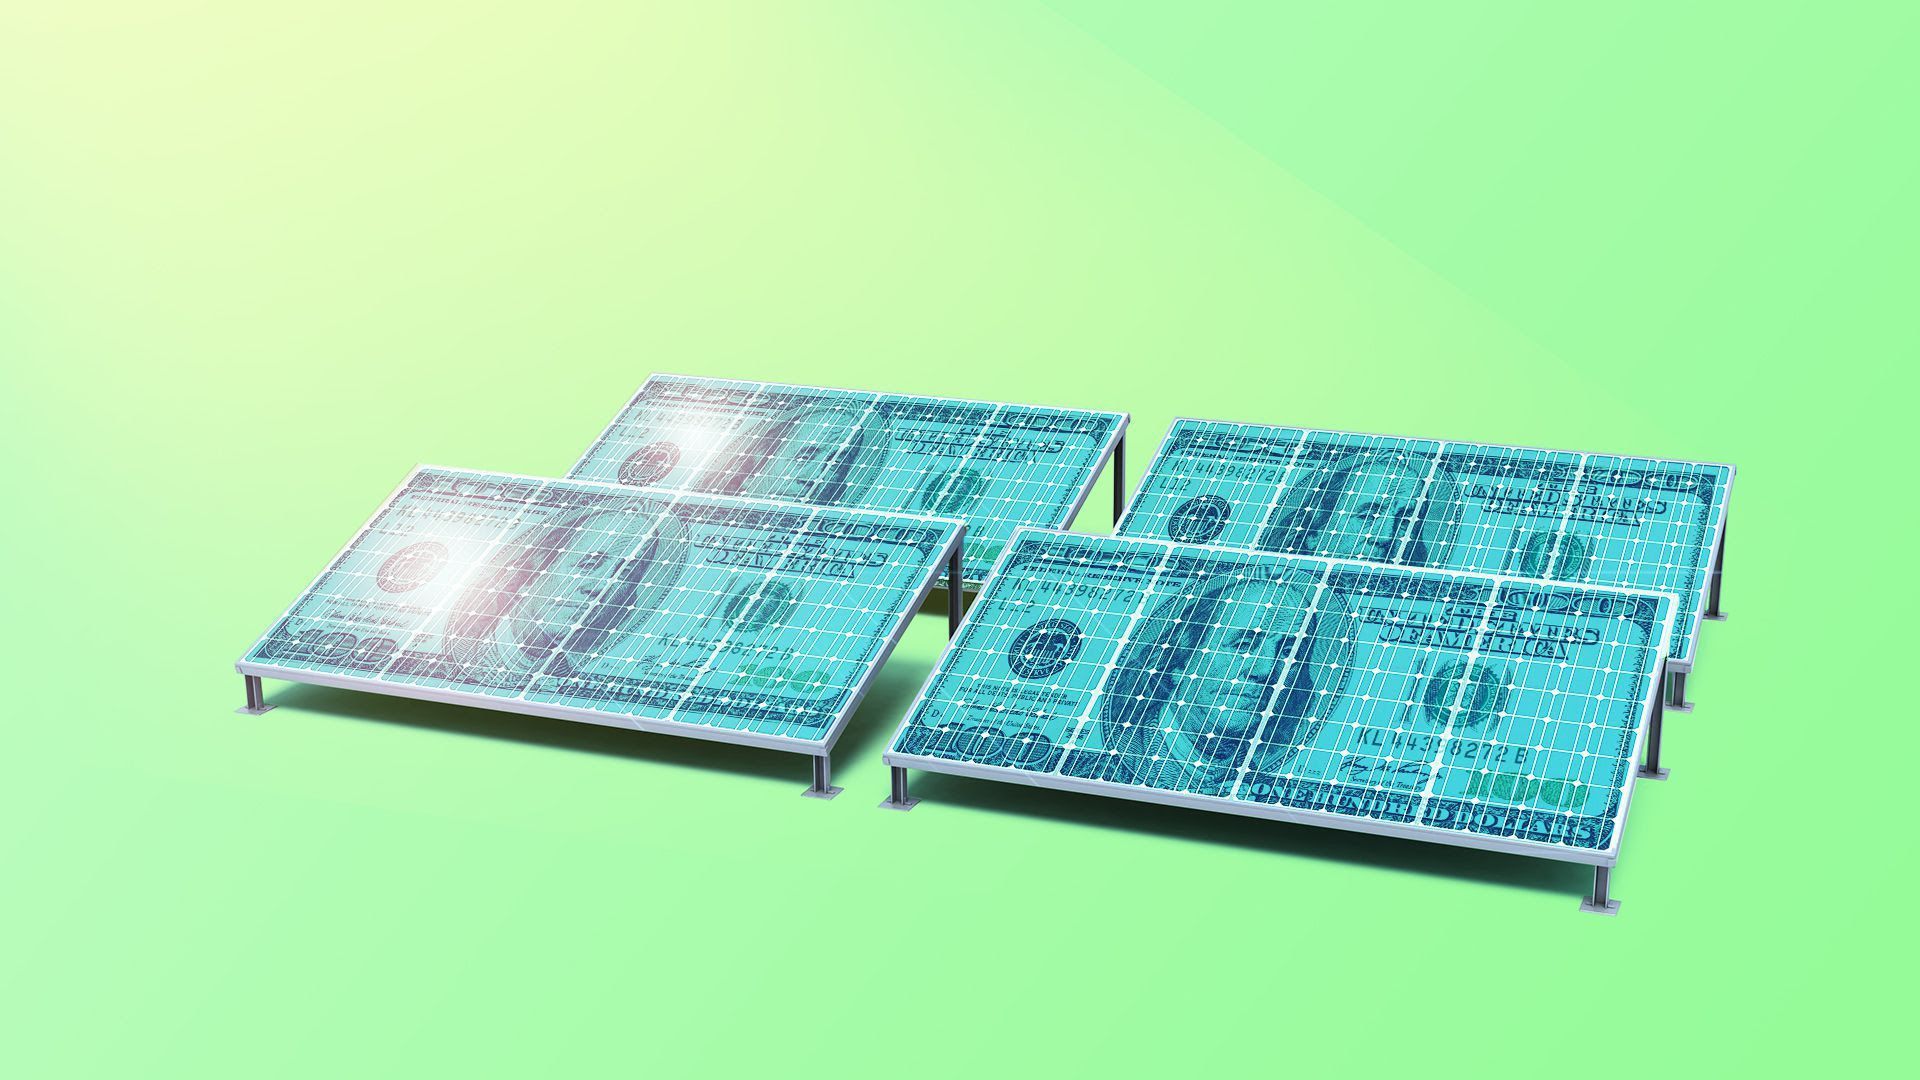 Illustration of solar panels designed to look like 100 dollar bills